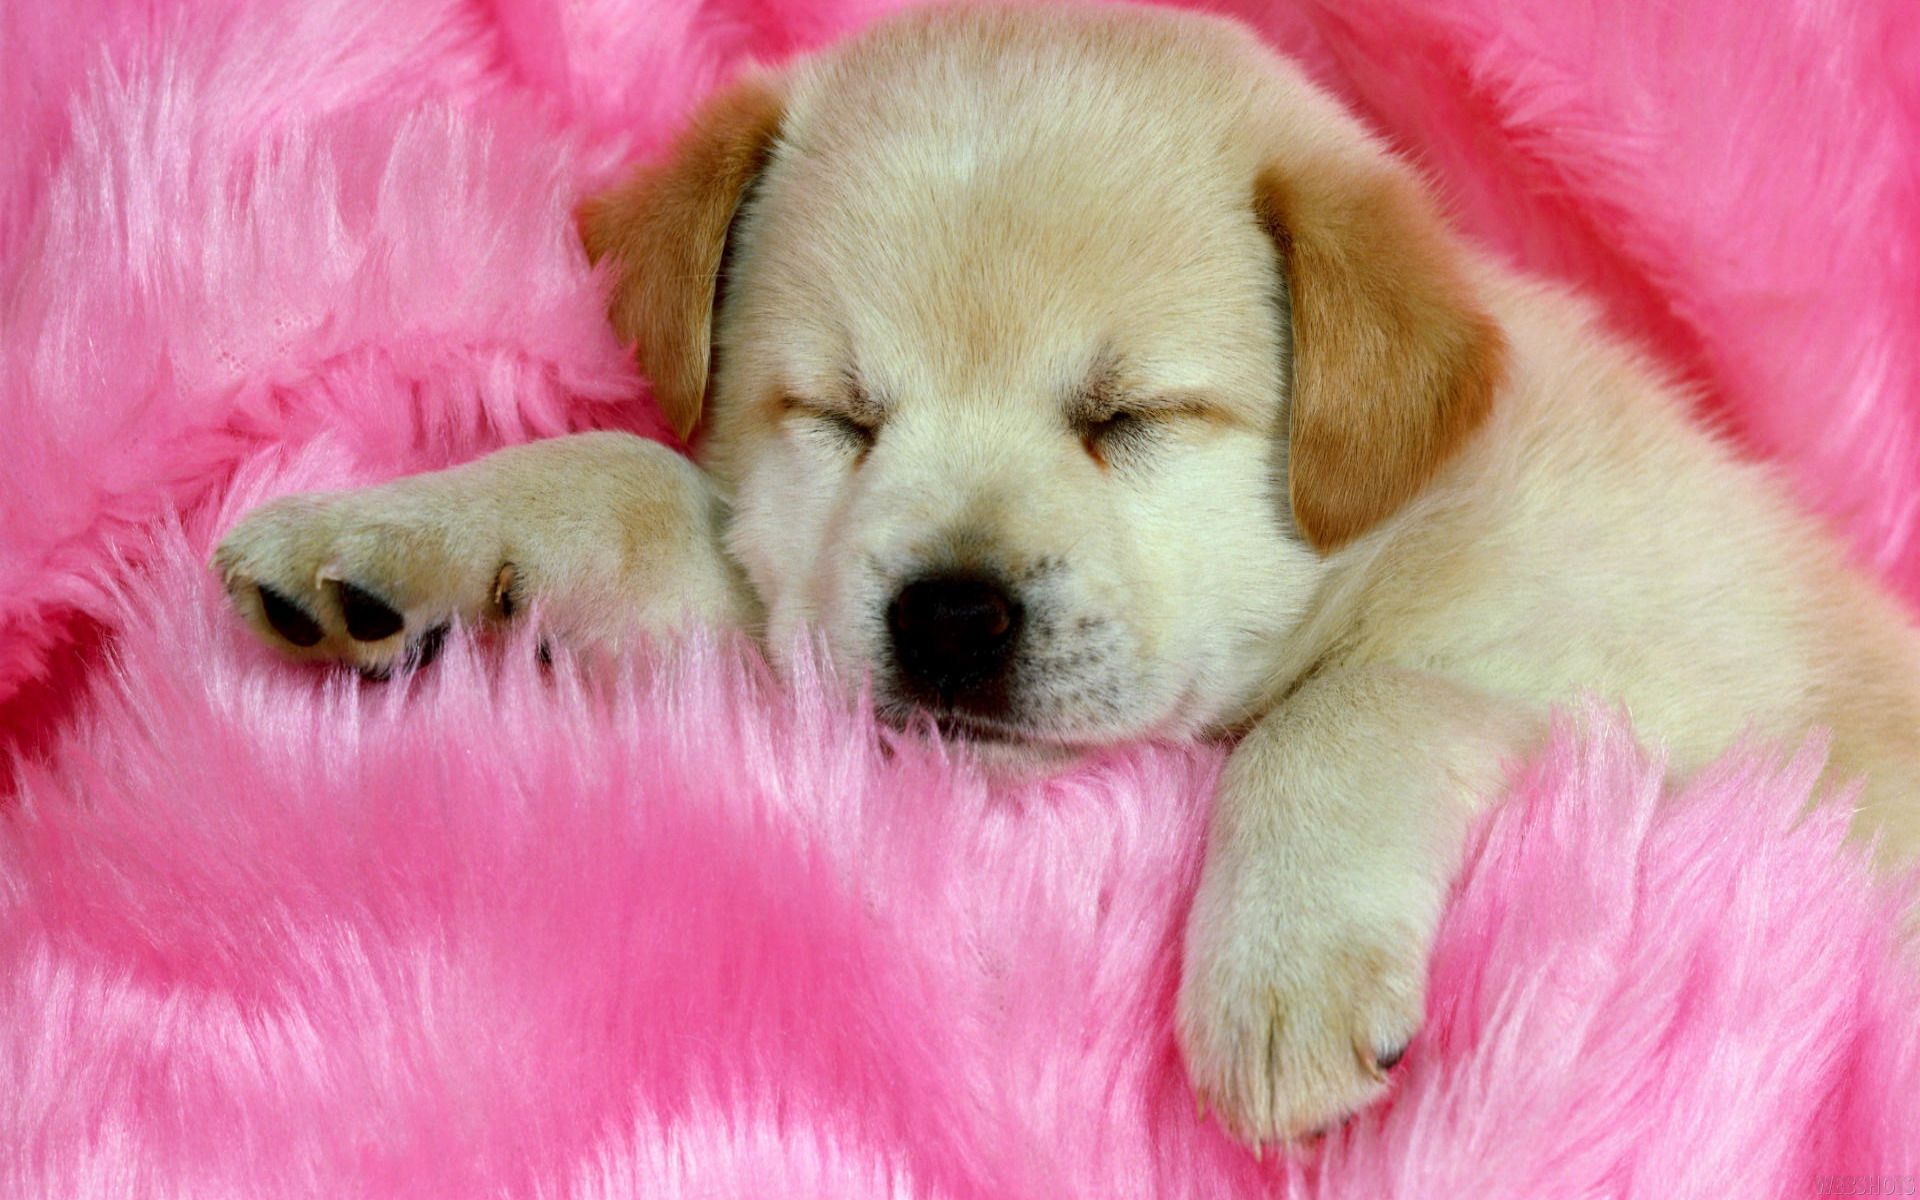 Super Cute Baby Puppies Sleeping - wallpaper.